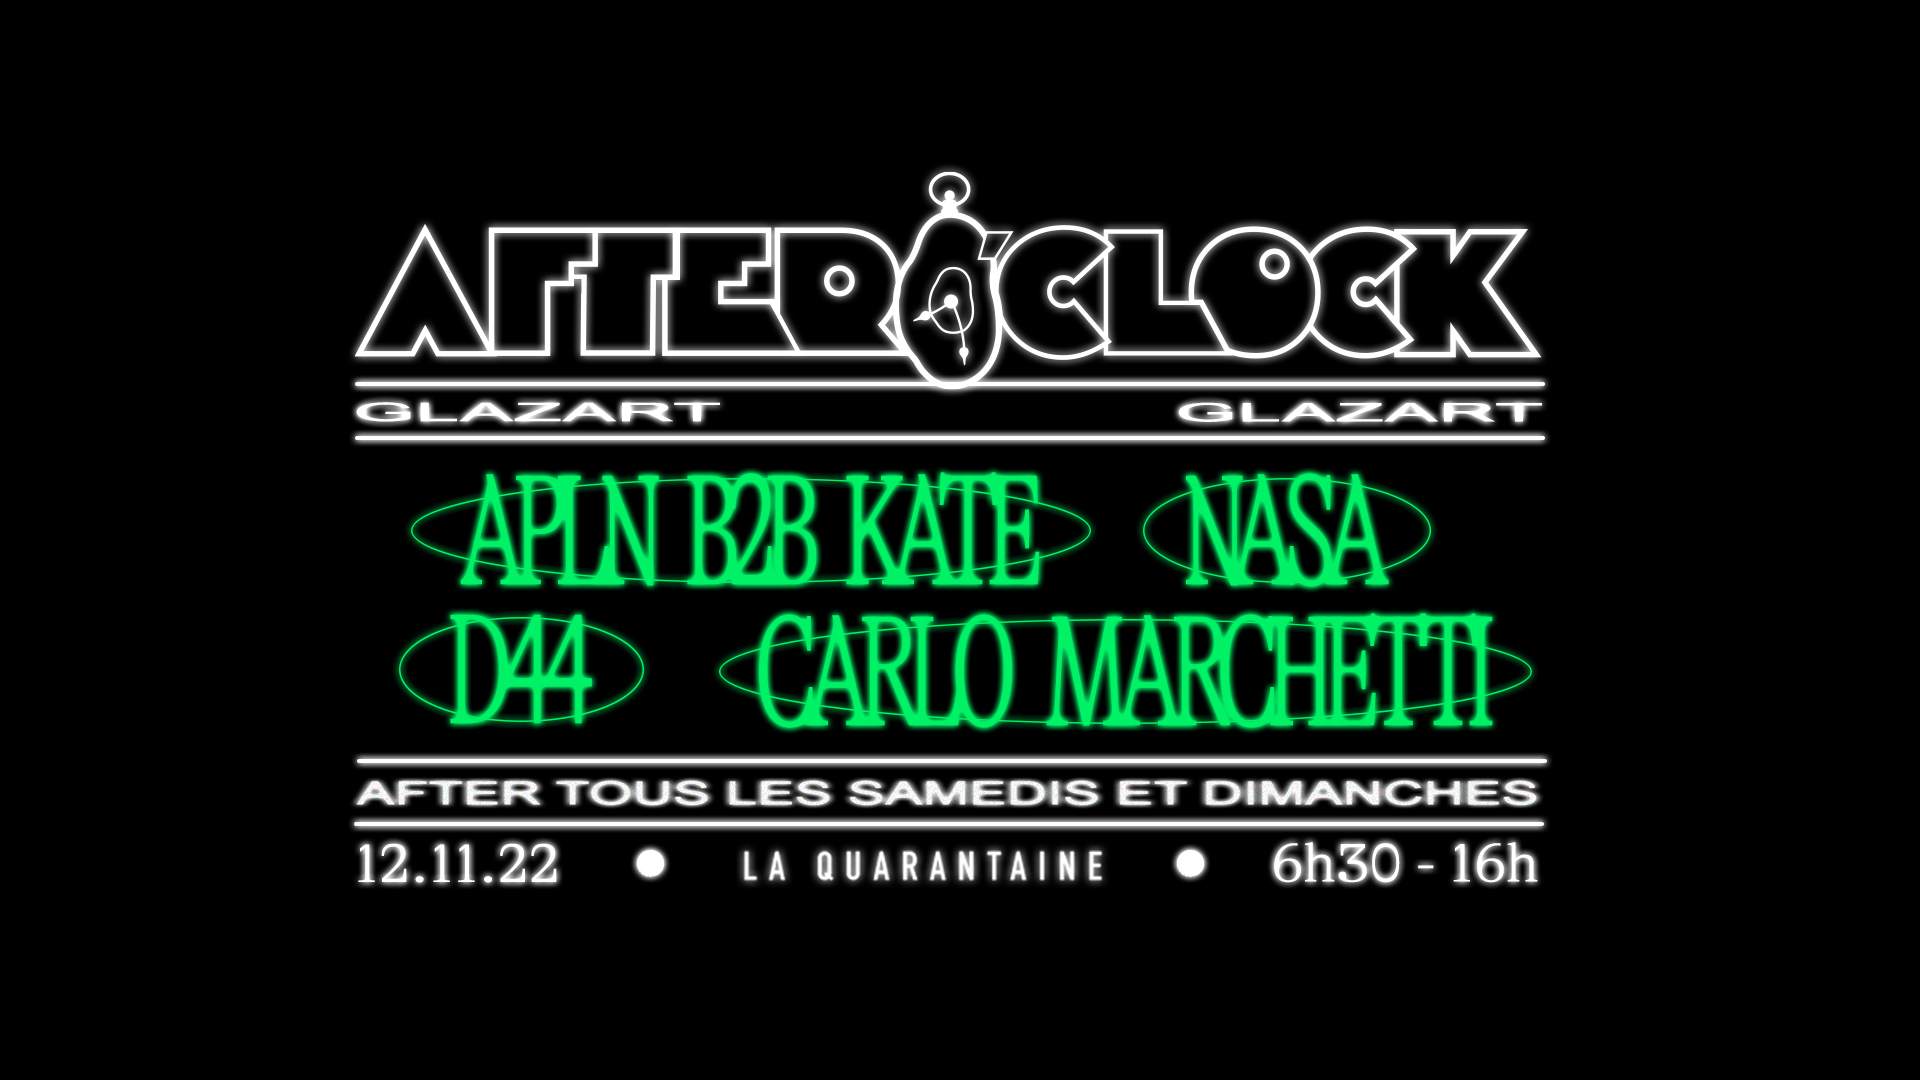 After O'Clock x La Quarantaine: APLN b2b KATE, Carlo Marchetti, D44, Nasa - Página frontal